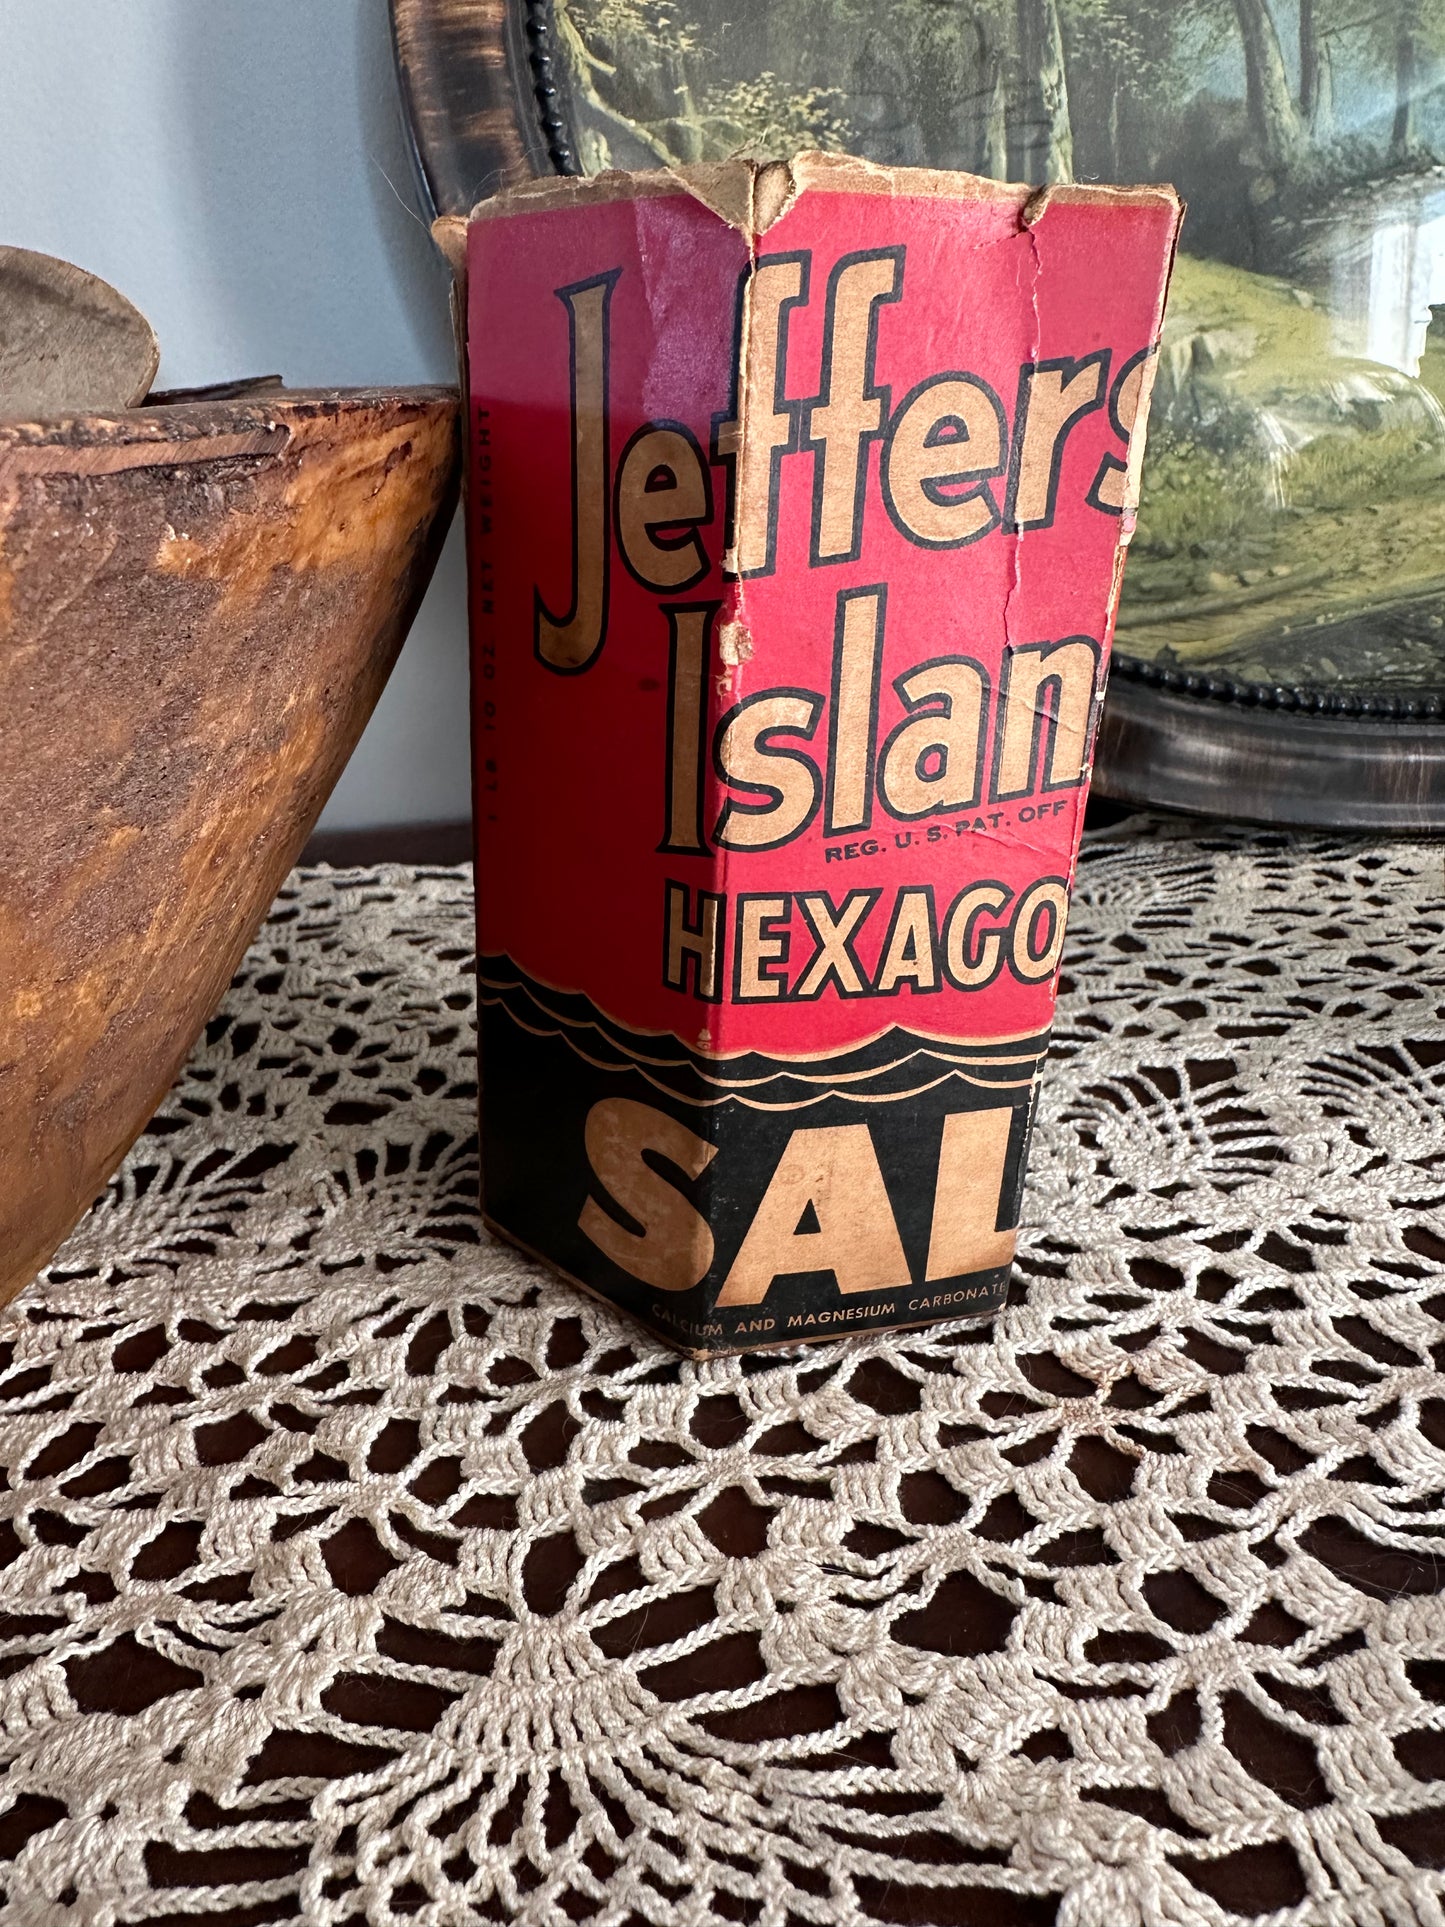 Jefferson island hexagon salt